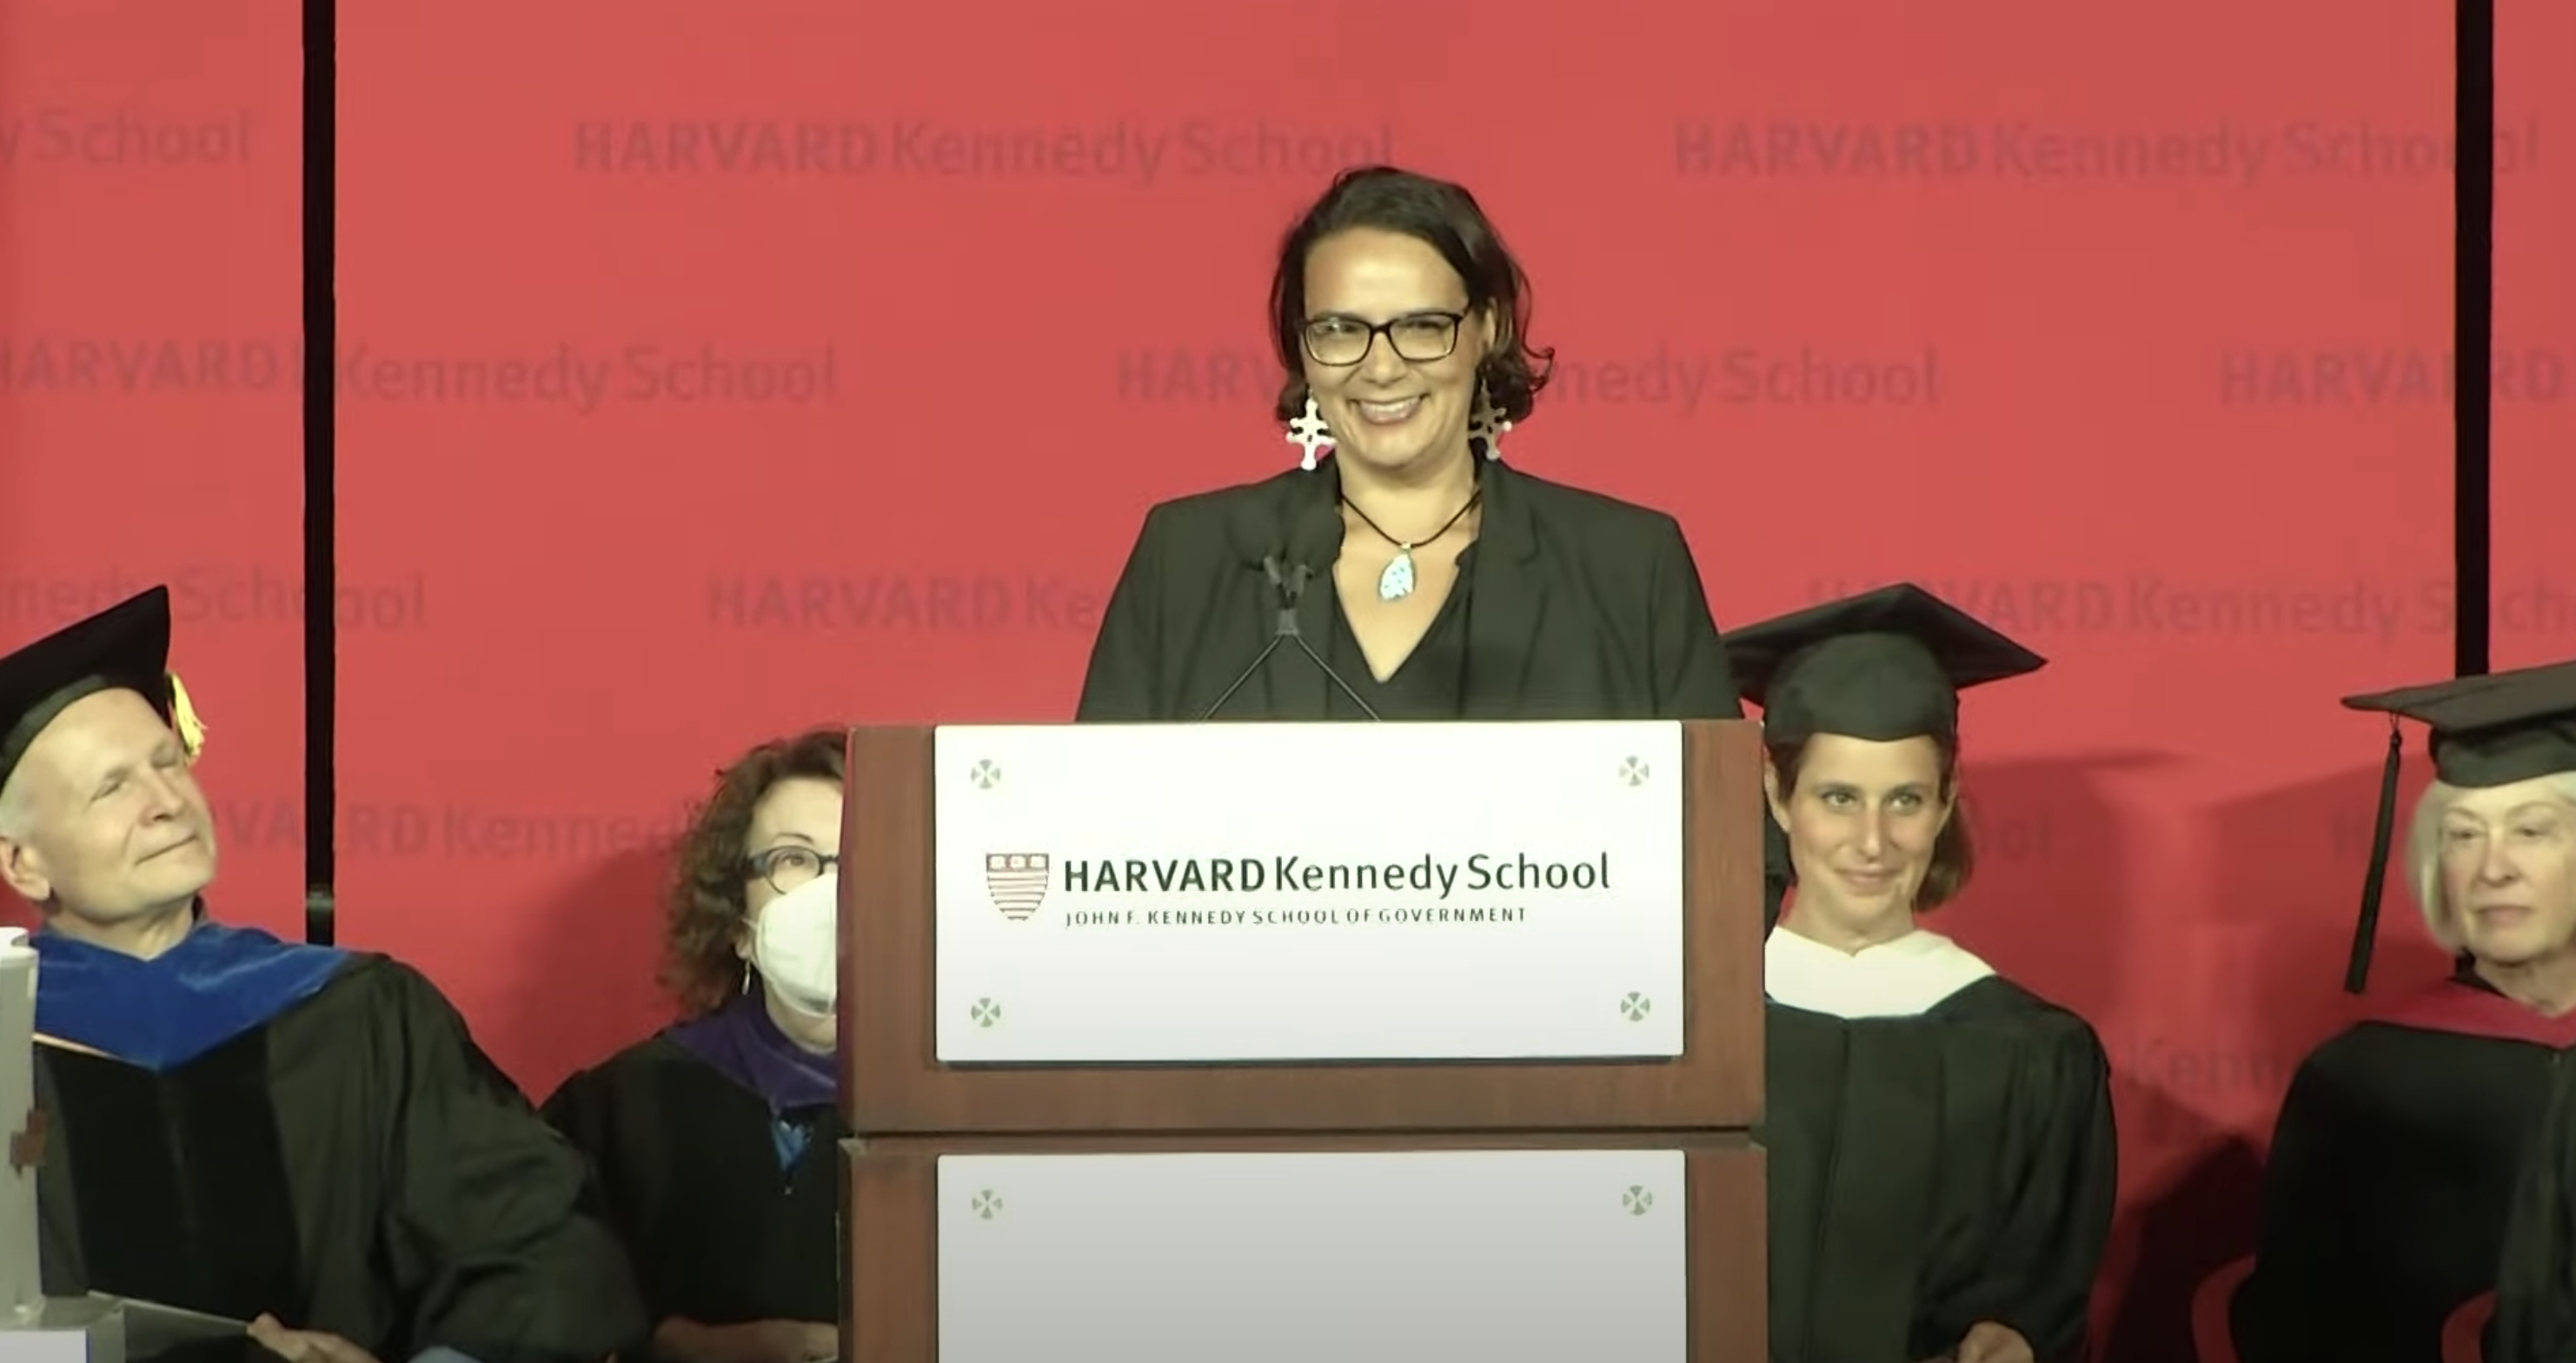 Megan Minoka Hill stands at a podium addressing Kennedy School graduates